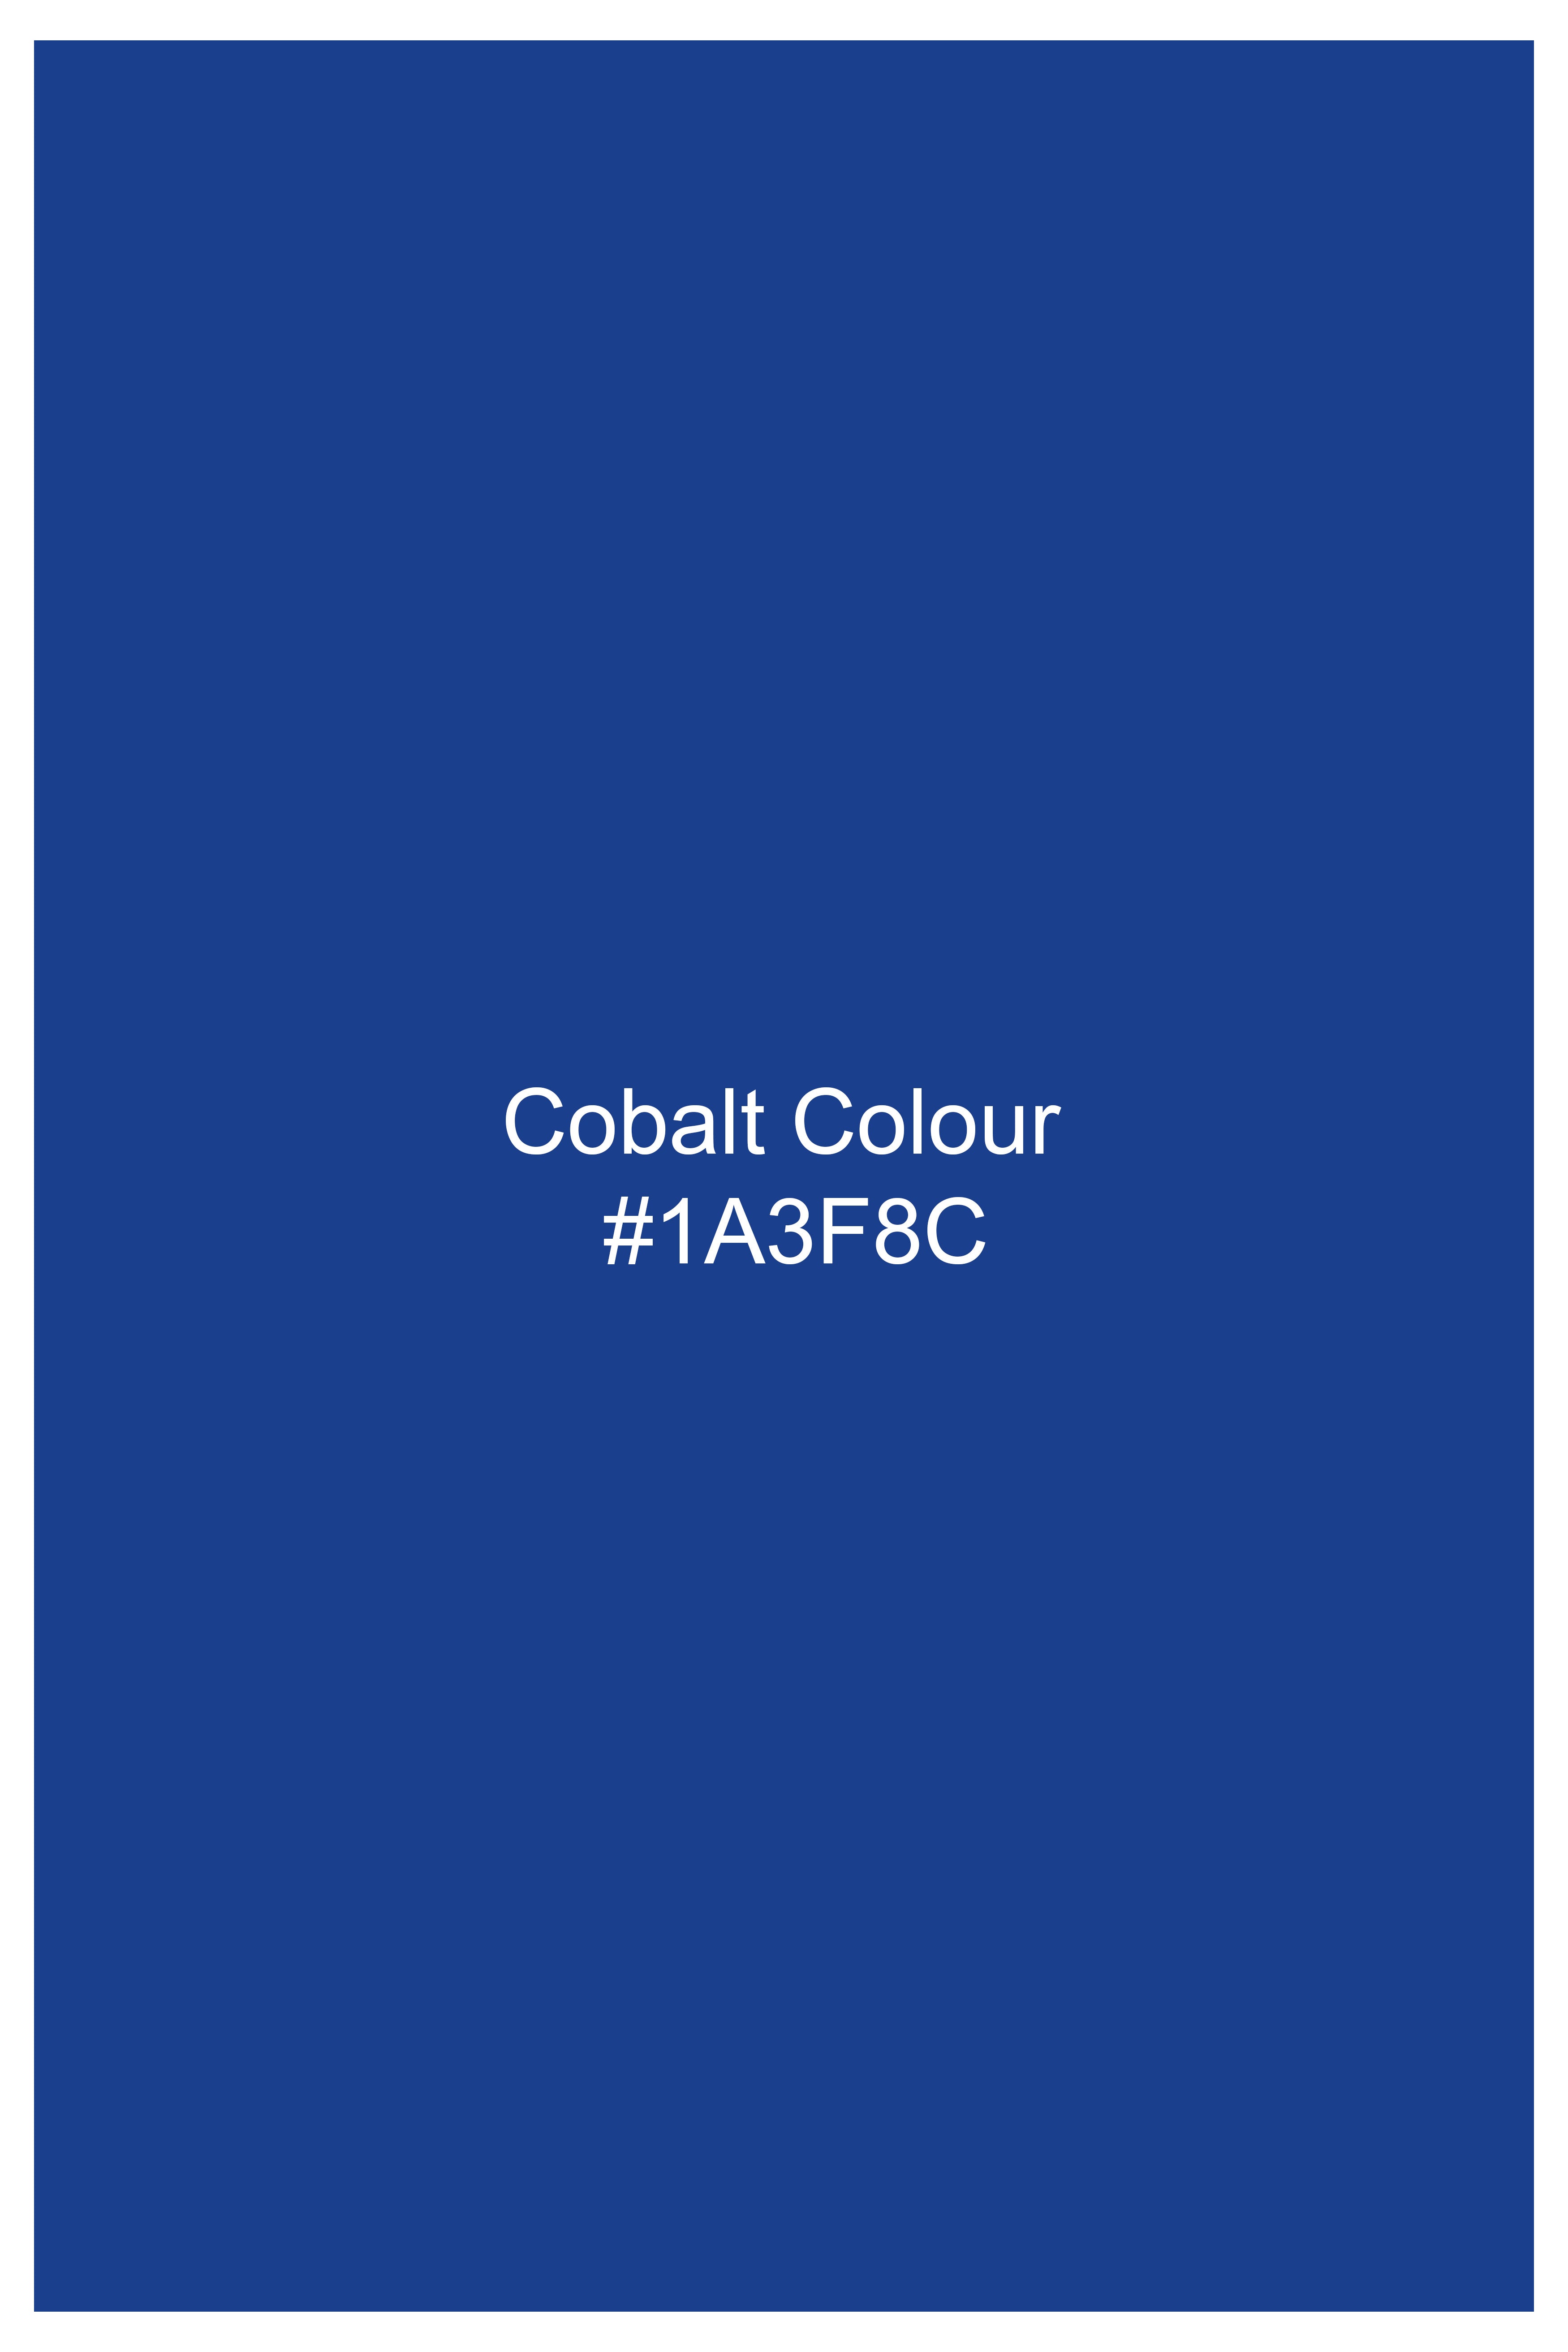 Cobalt Blue Double Breasted Corduroy Premium Cotton Blazer  BL2967-DB-36, BL2967-DB-38, BL2967-DB-40, BL2967-DB-42, BL2967-DB-44, BL2967-DB-46, BL2967-DB-48, BL2967-DB-50, BL2967-DB-52, BL2967-DB-54, BL2967-DB-56, BL2967-DB-58, BL2967-DB-60